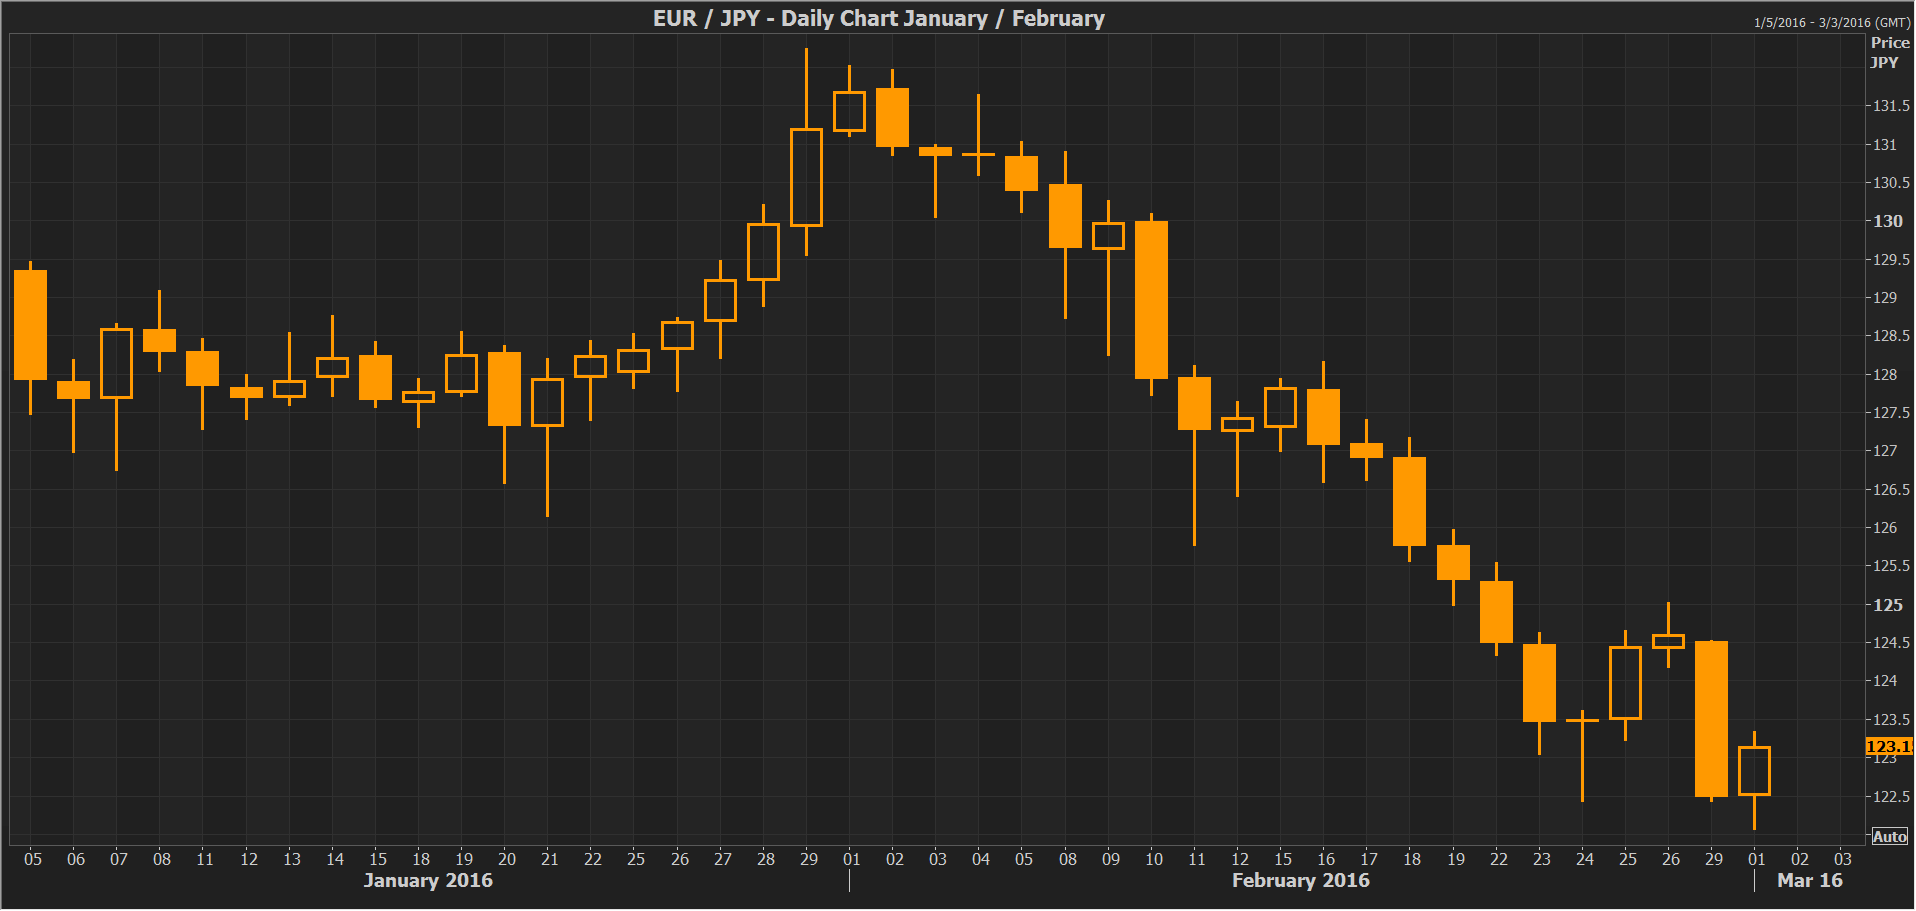 EUR/JPY Daily Chart - January / February